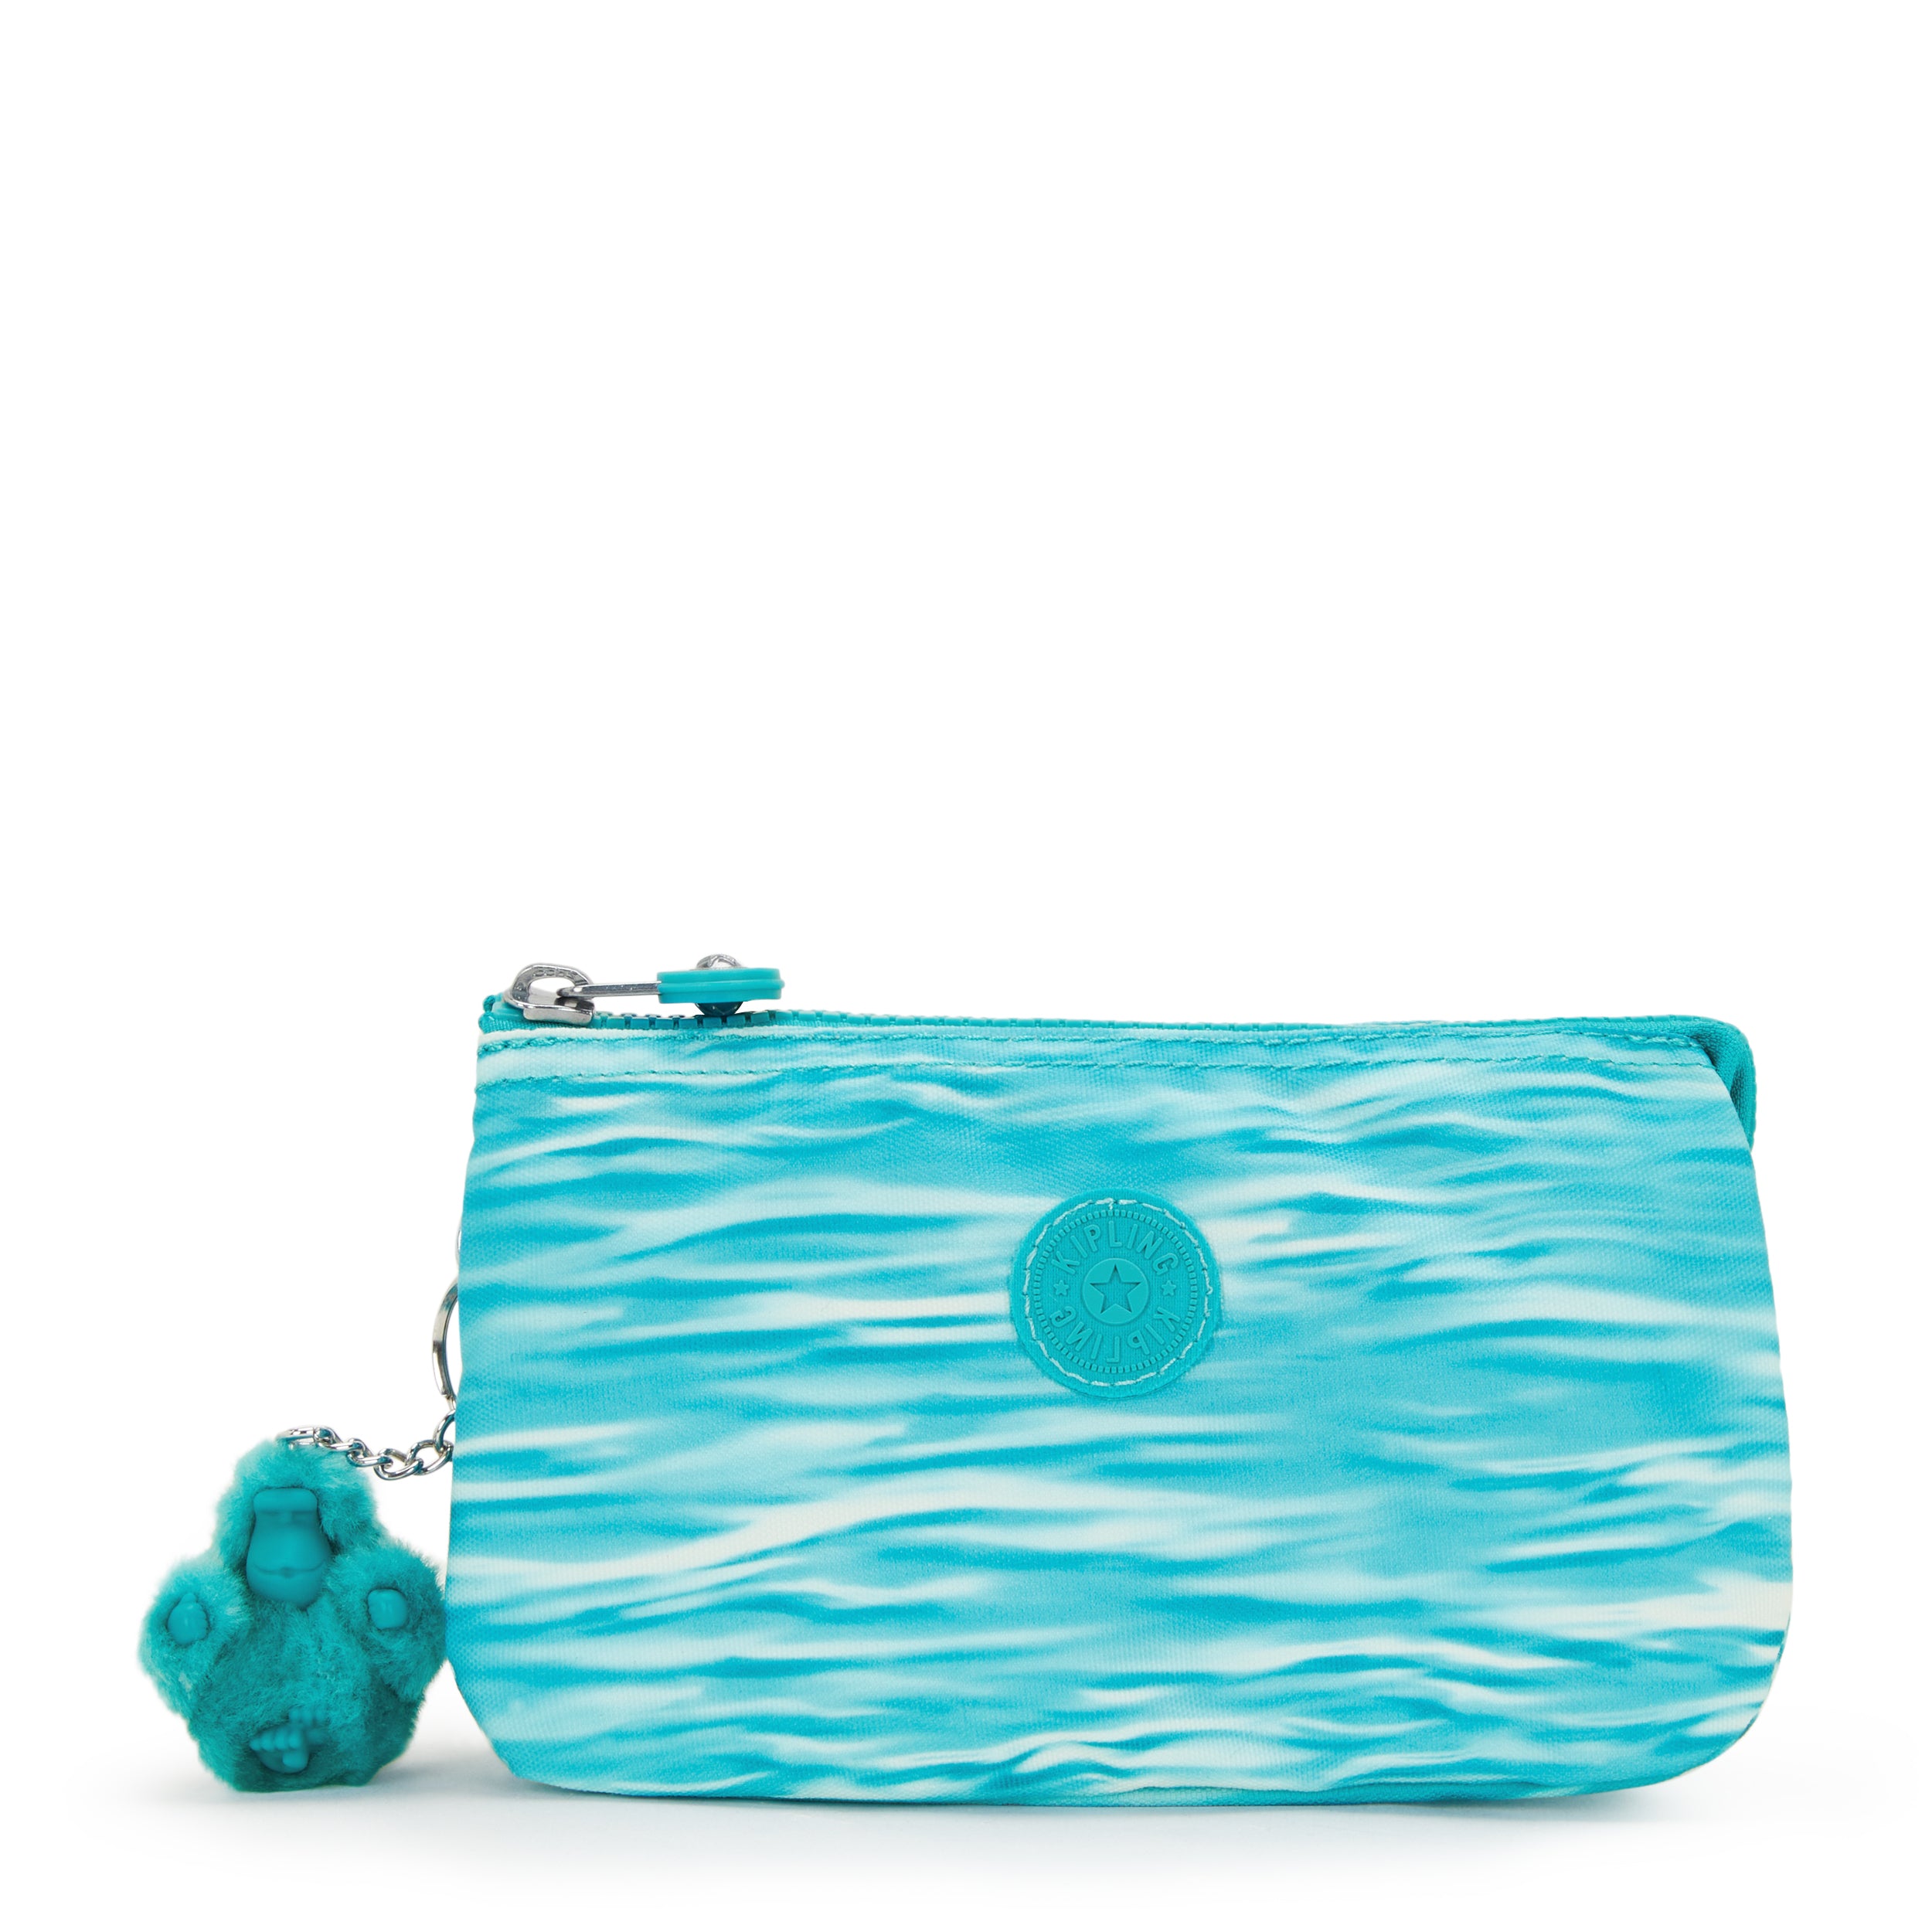 KIPLING-Creativity L-Large purse-Aqua Pool-I7410-5MF